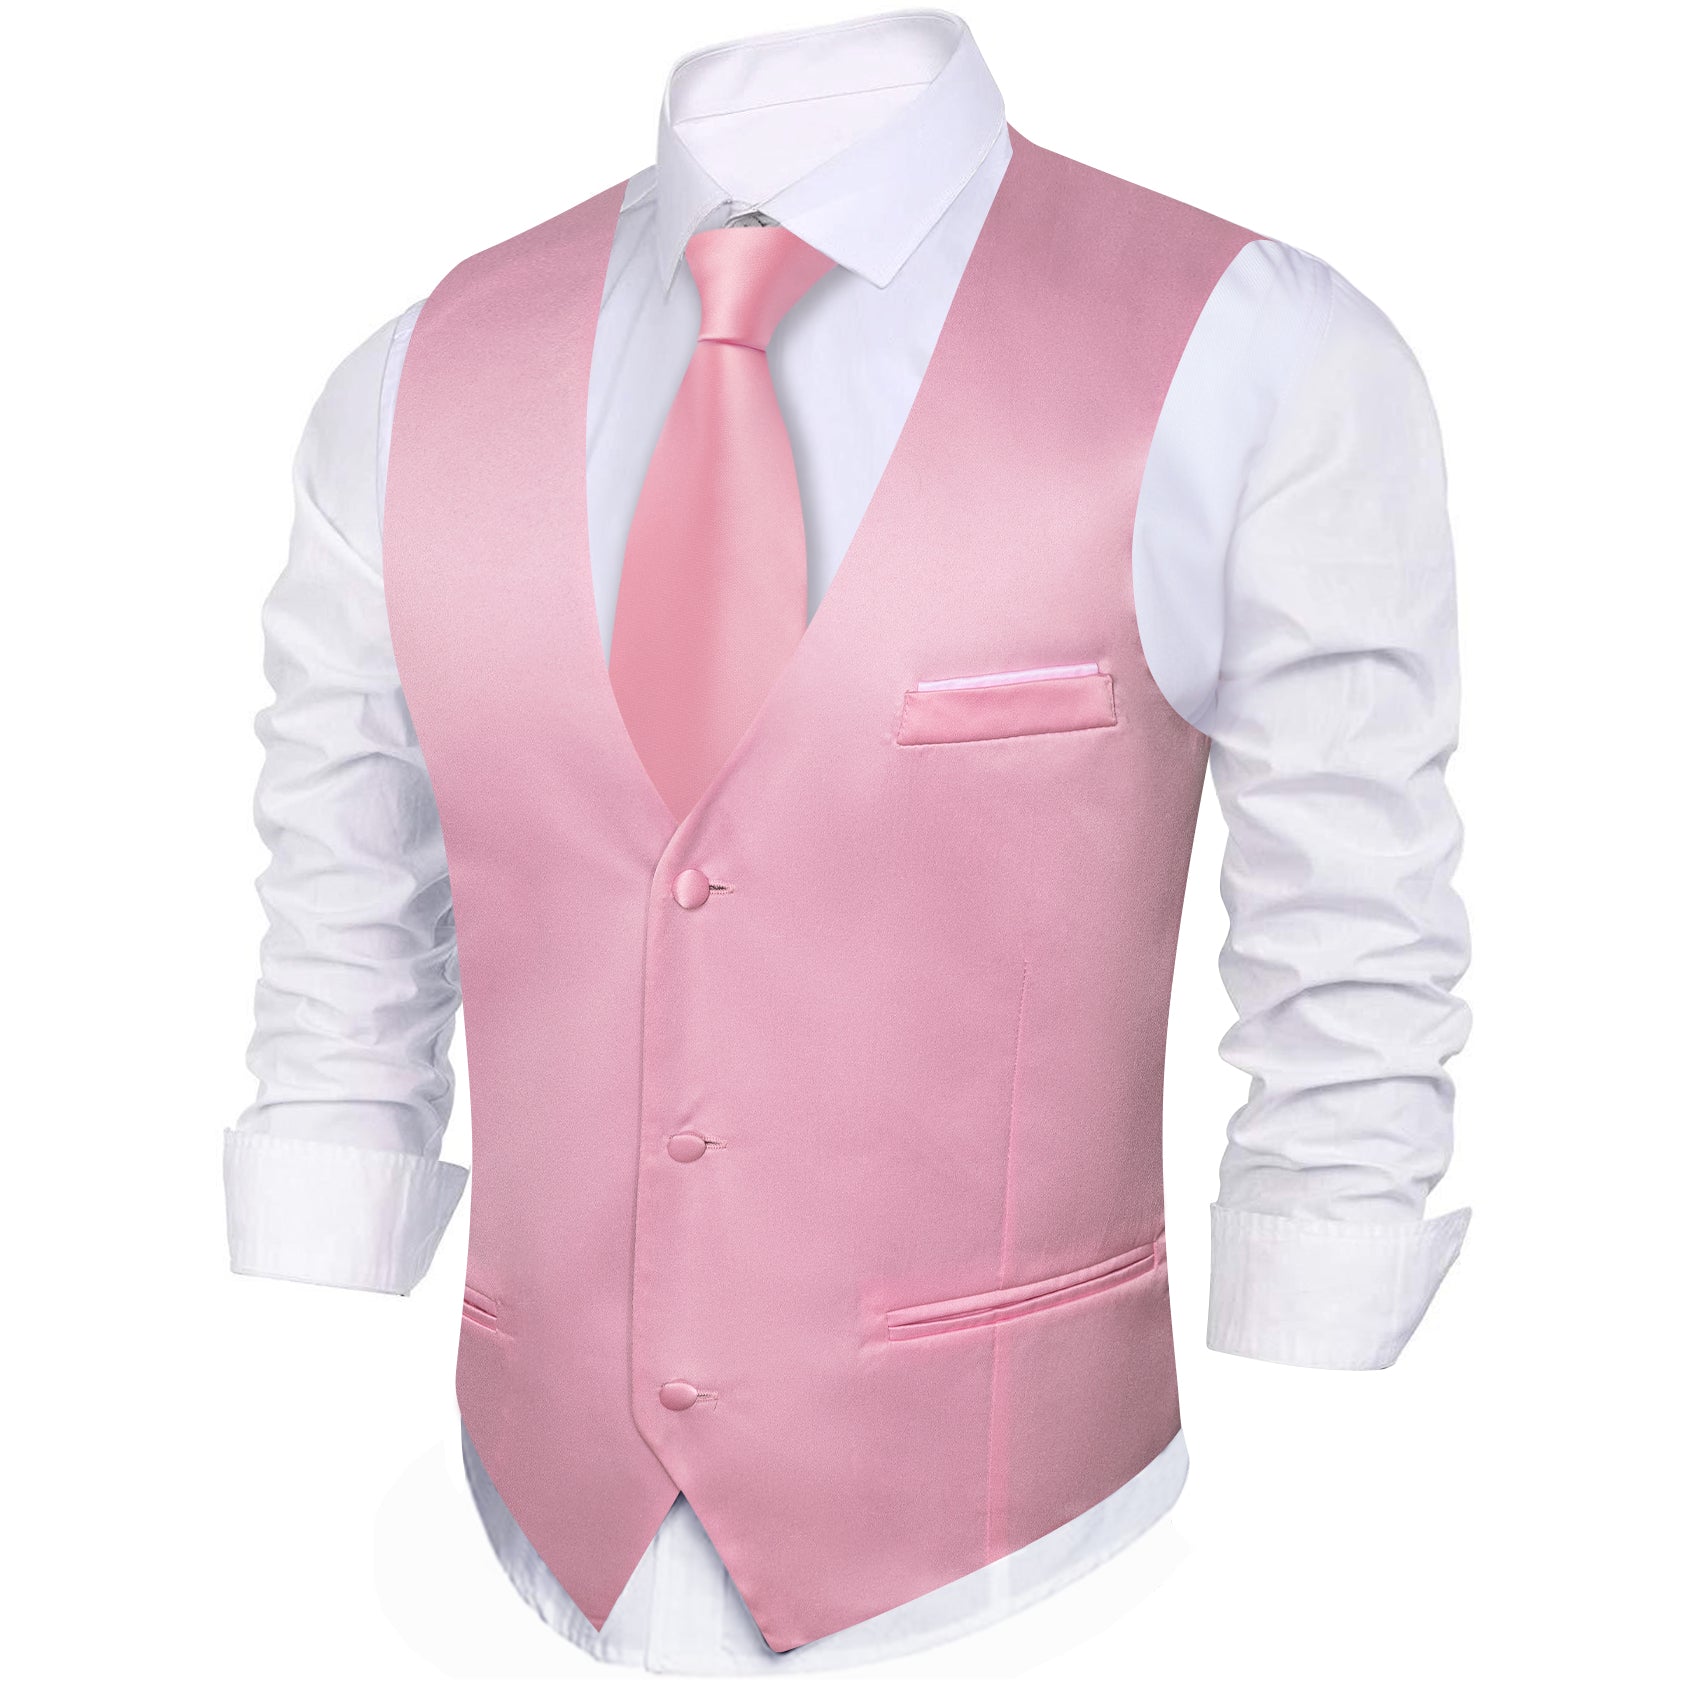 Barry.wang Men's Vest Formal Pink Solid Silk Waistcoat Vest Business